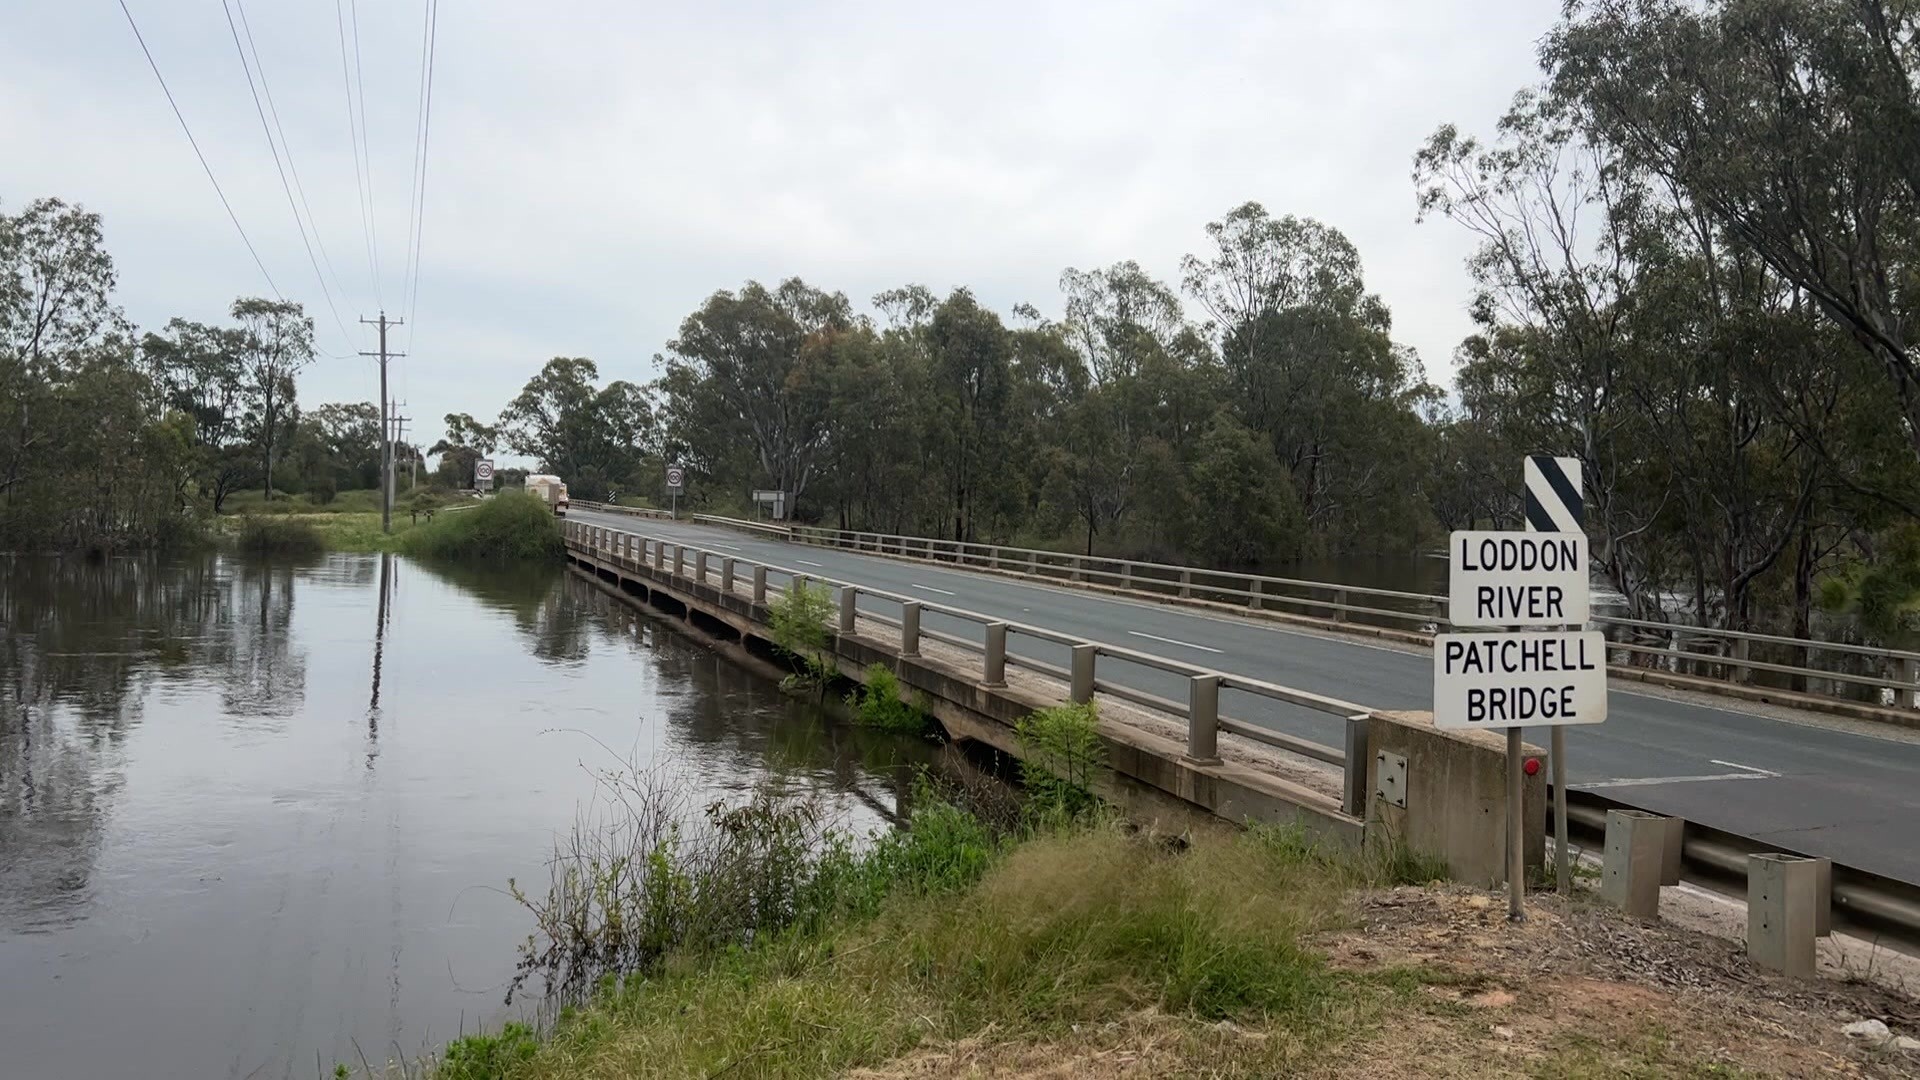 A bridge signed "Loddon River - Patchell Bridge"